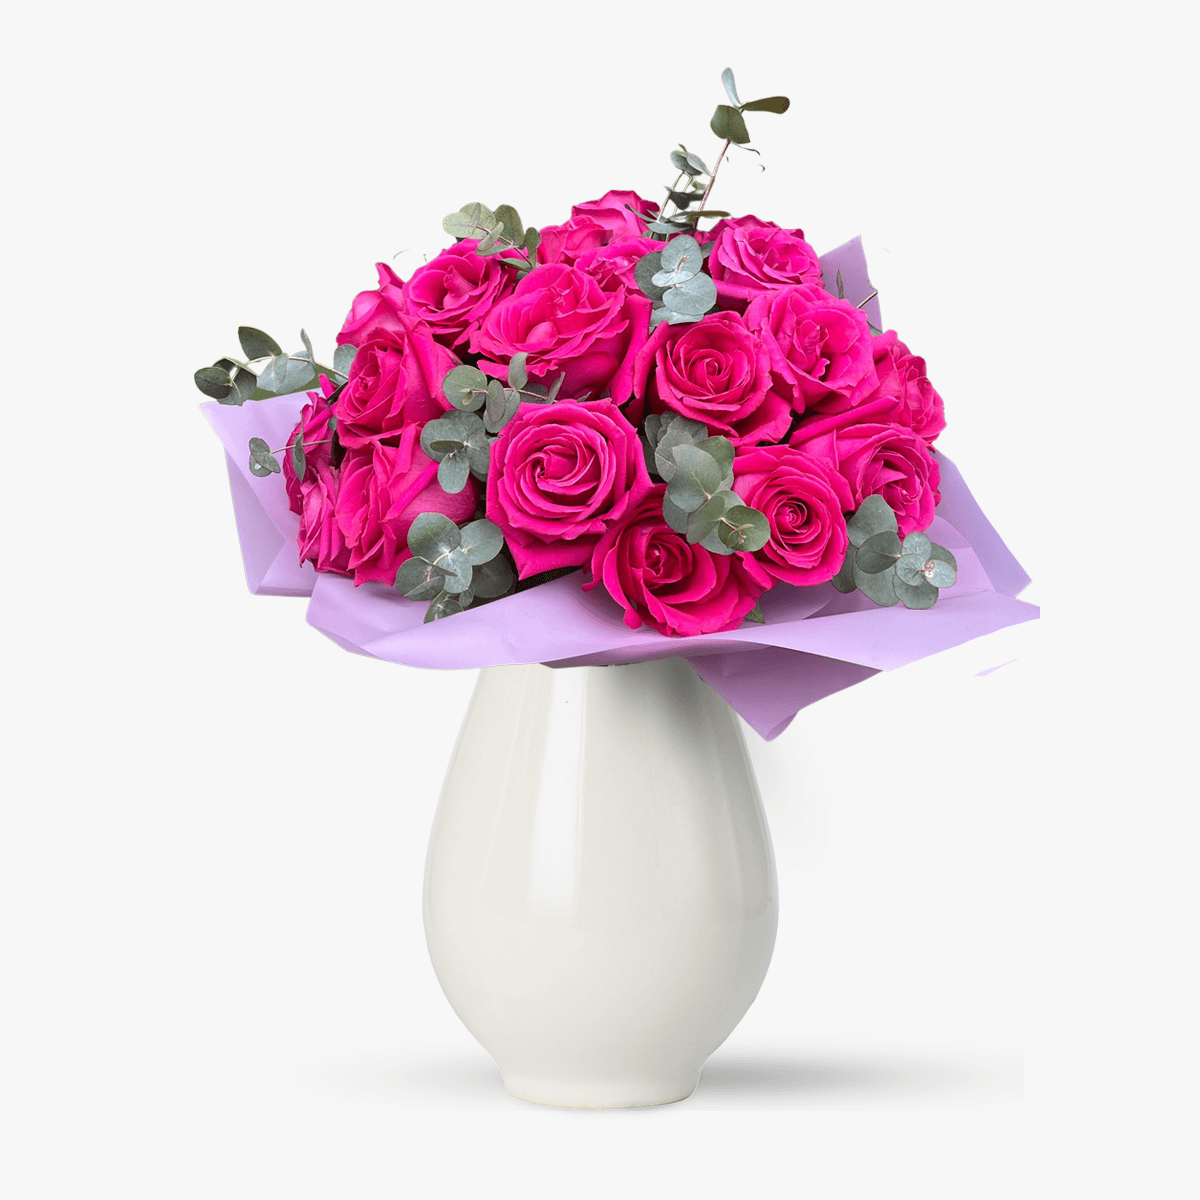 Buchet de 19 trandafiri roz – Standard Buchet